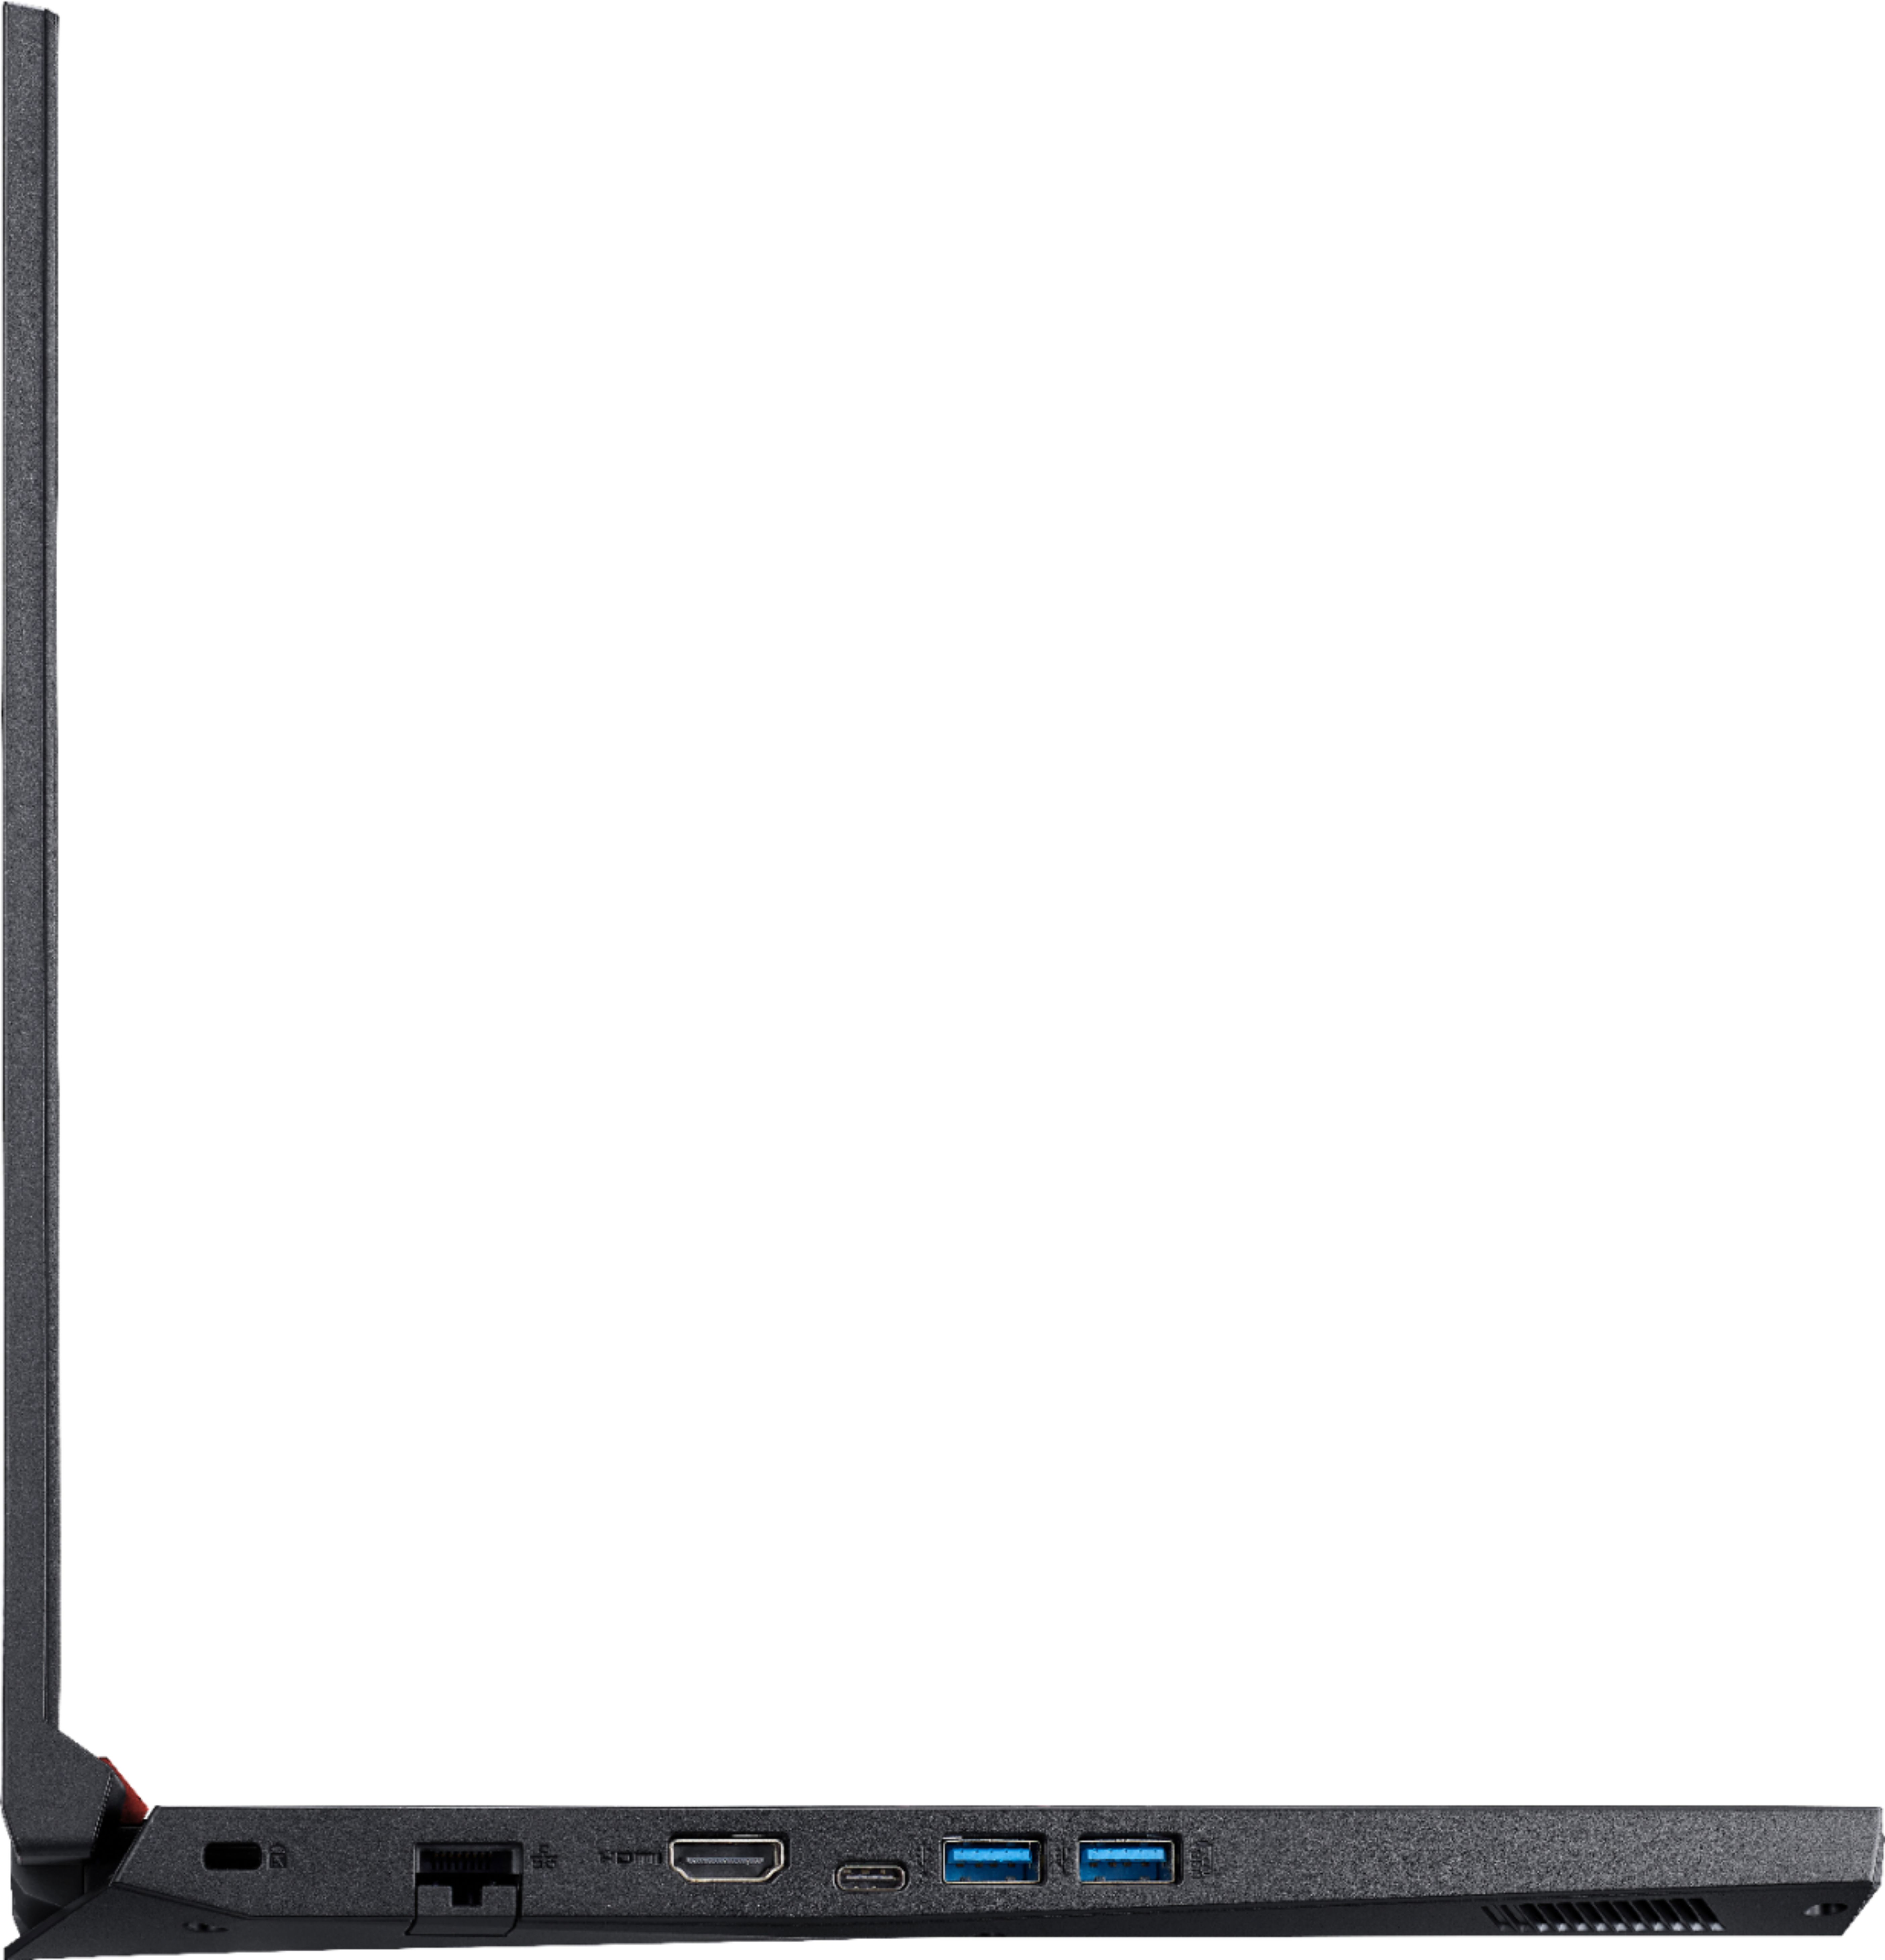 The Last of Us Part I Gameplay Acer Nitro 5 GTX-1650 i5 9300H 16GB RAM 